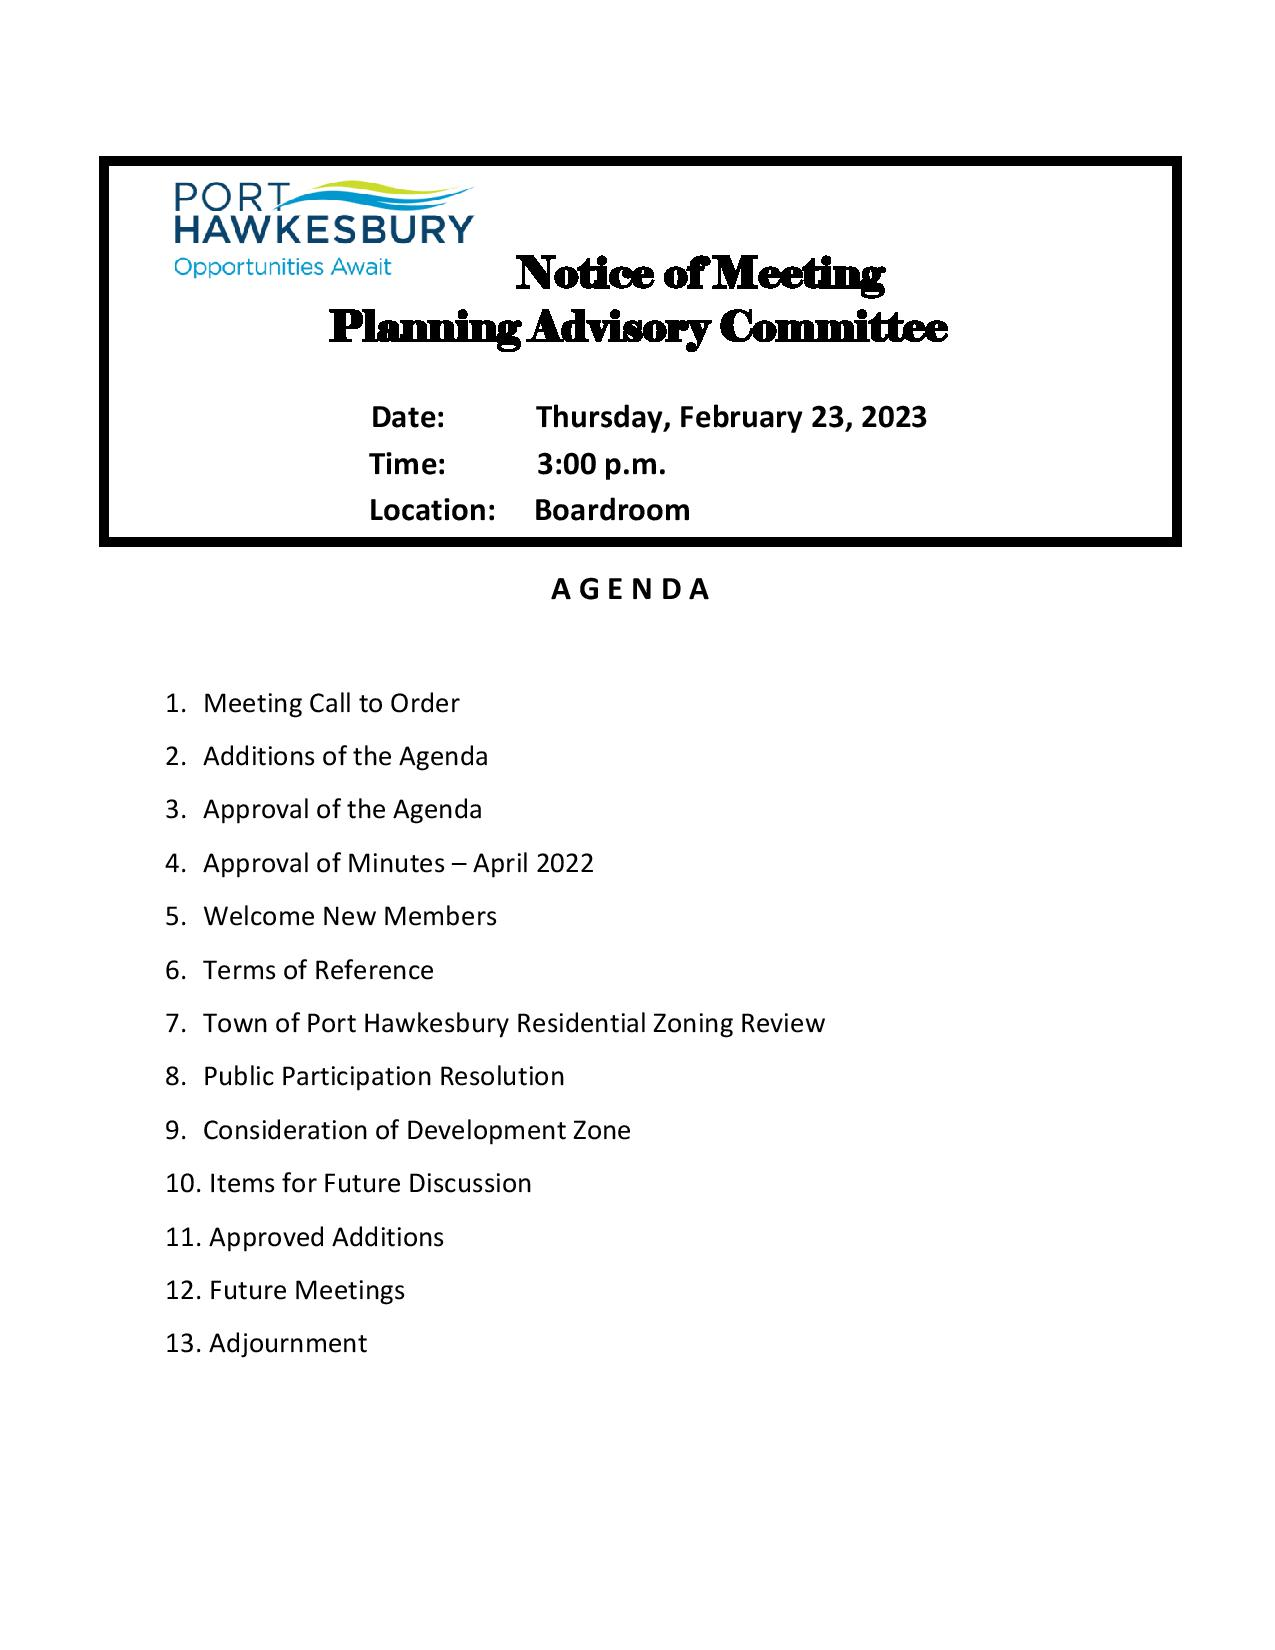 Planning Advisory Committee Meeting – February 23 2023